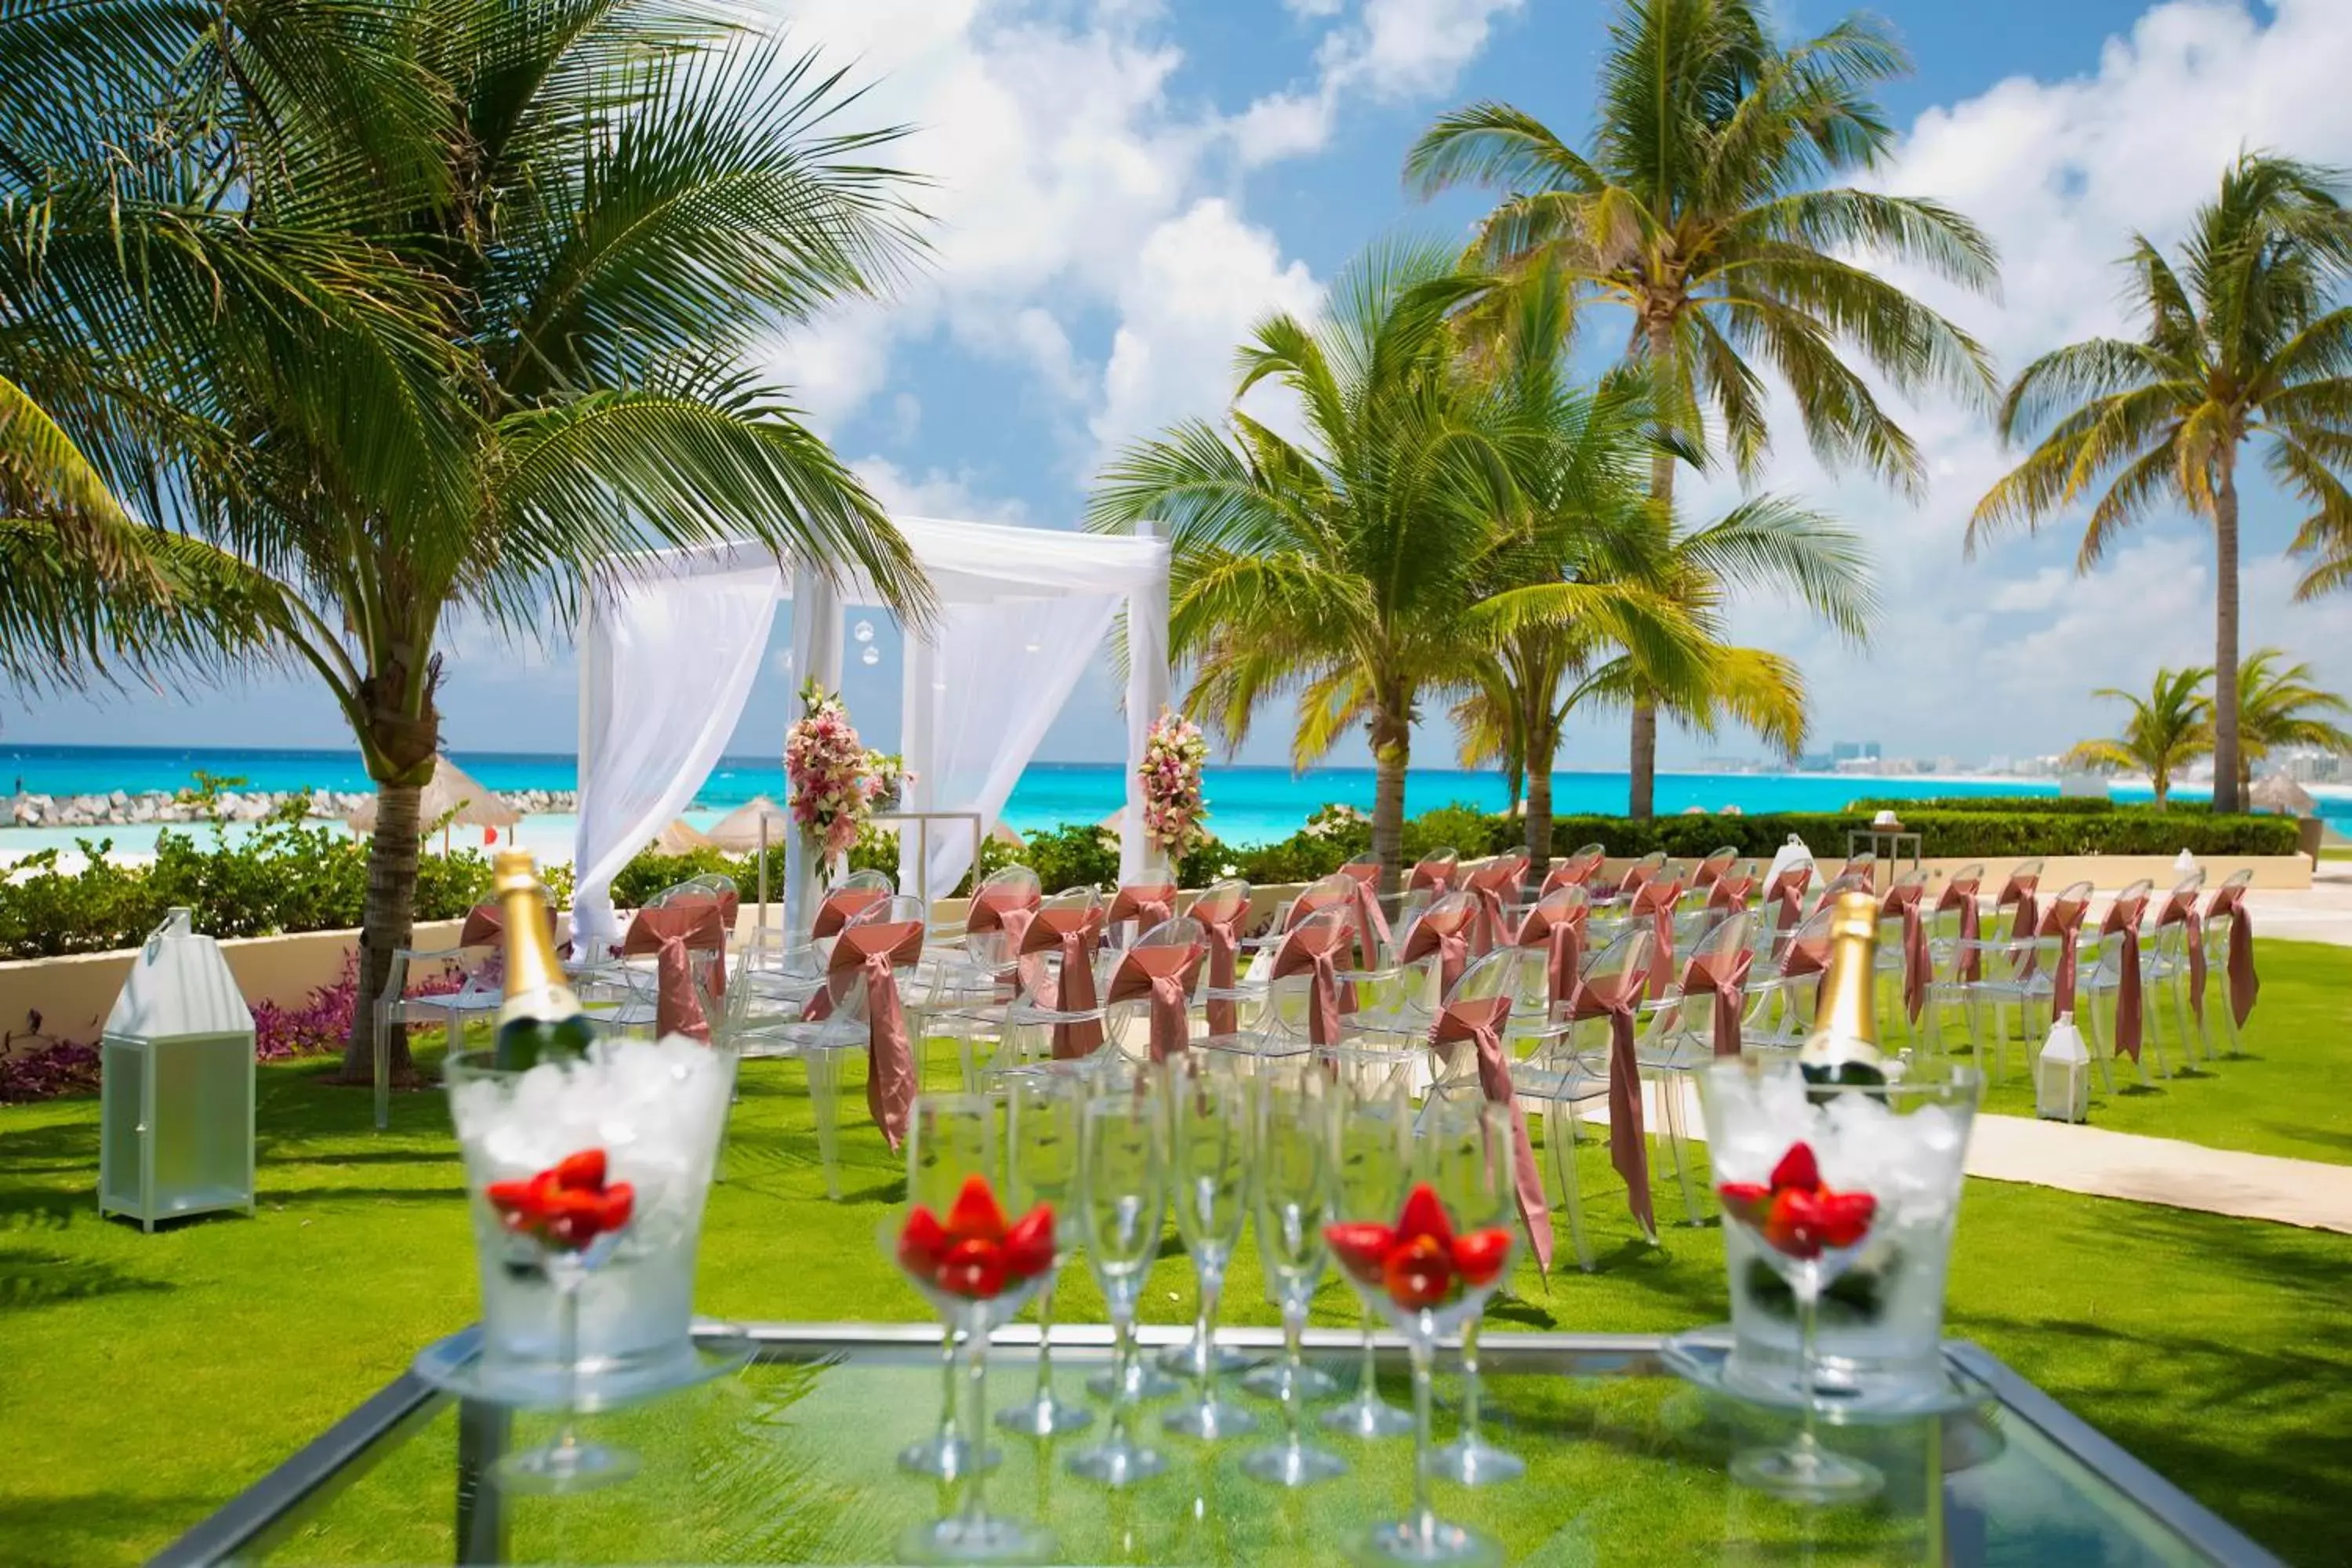 Banquet/Function facilities, Banquet Facilities in Krystal Grand Cancun